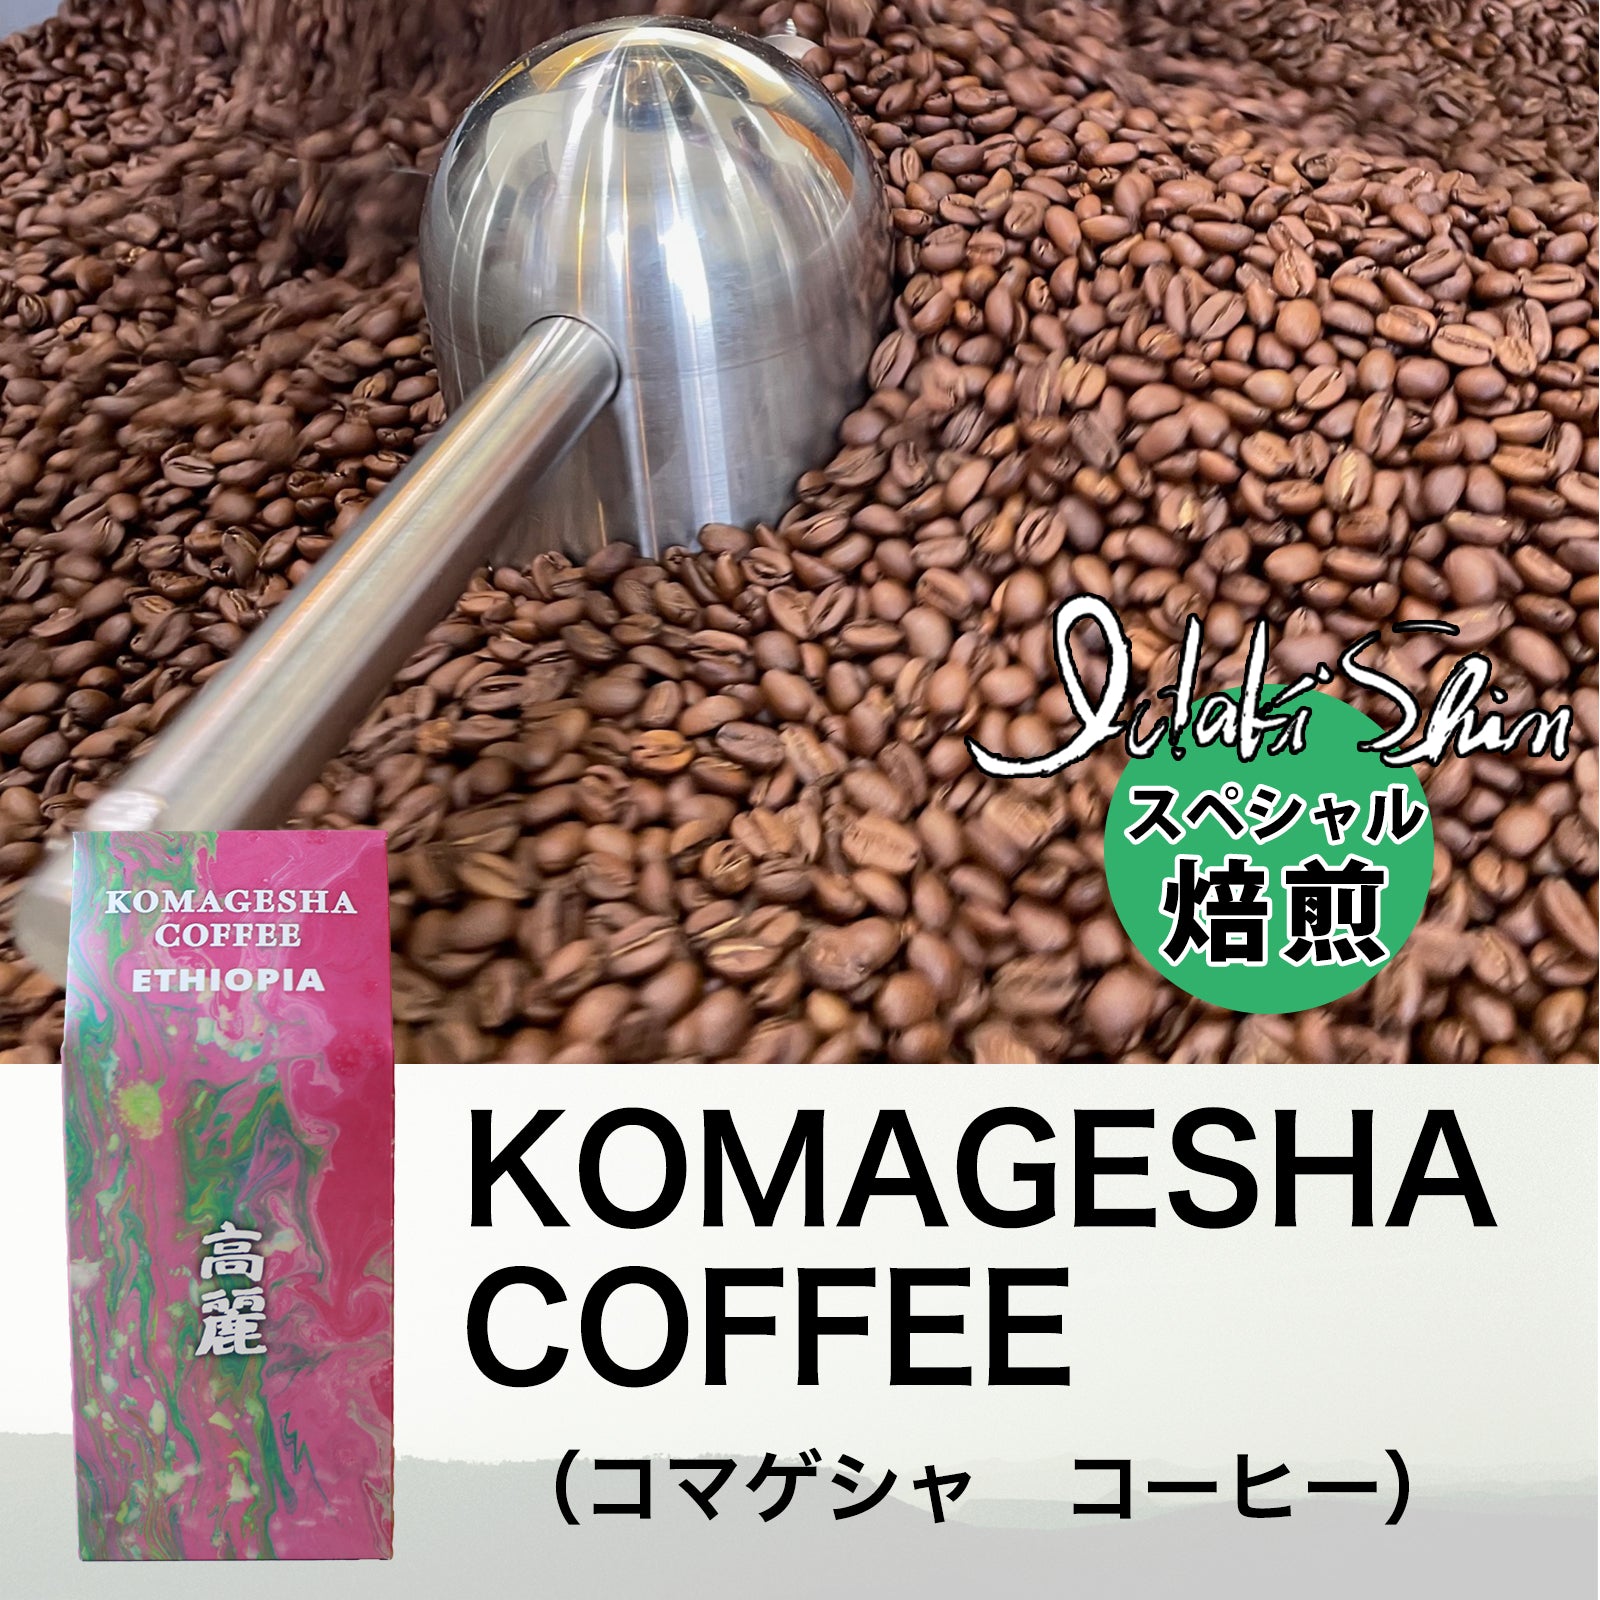 KOMAGESHA コーヒー（いだきしん焙煎）200g豆 – Andromeda Ethiopia